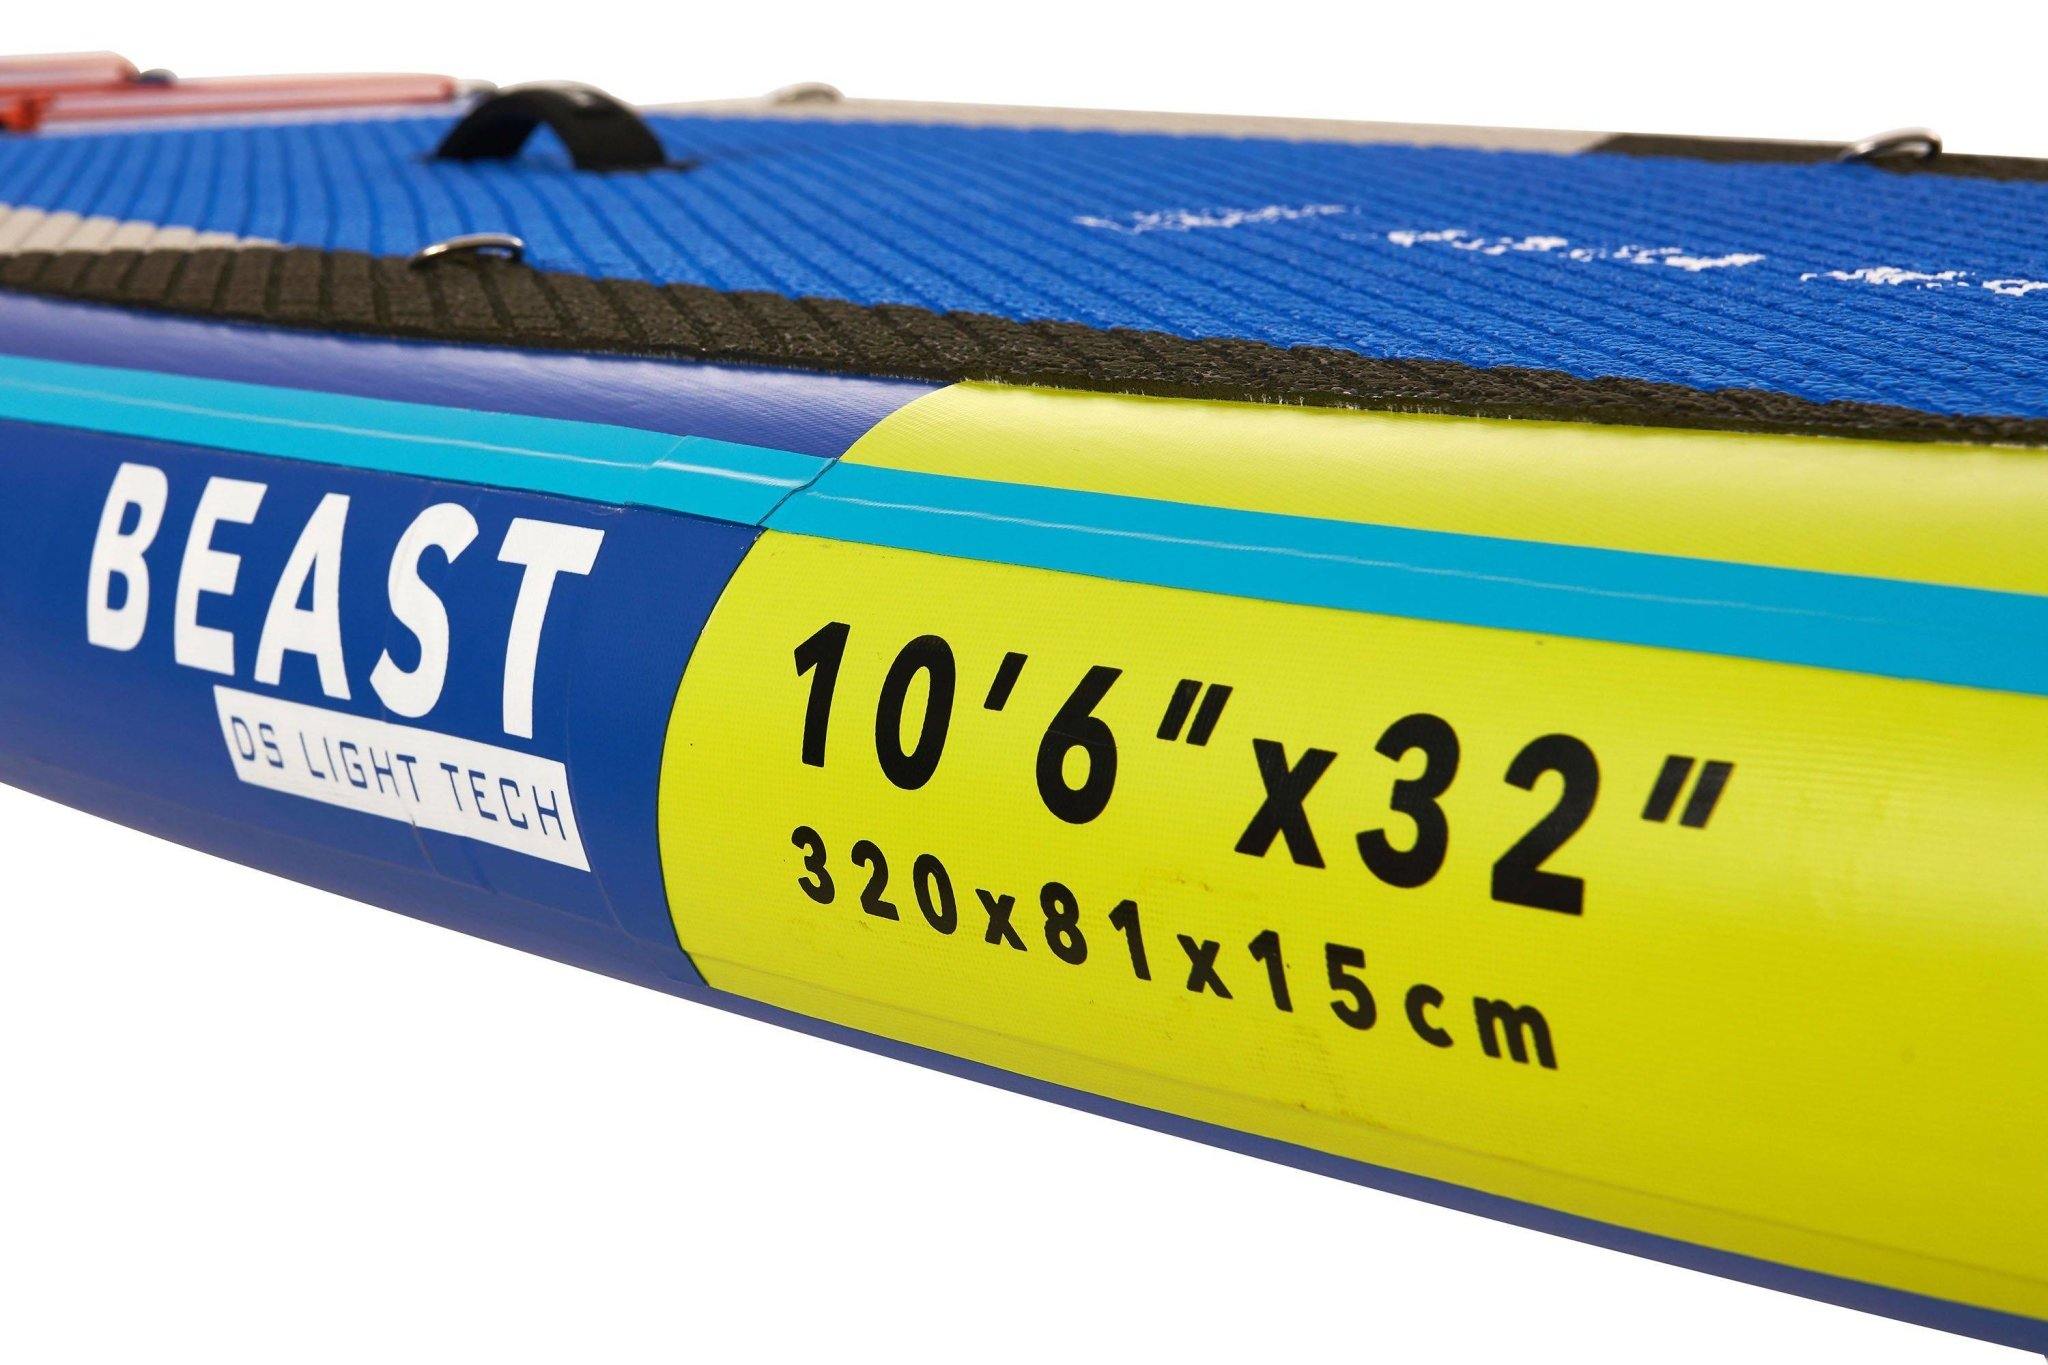 Beast Advanced All-Around iSUP Paddle Board - Dti Direct USA